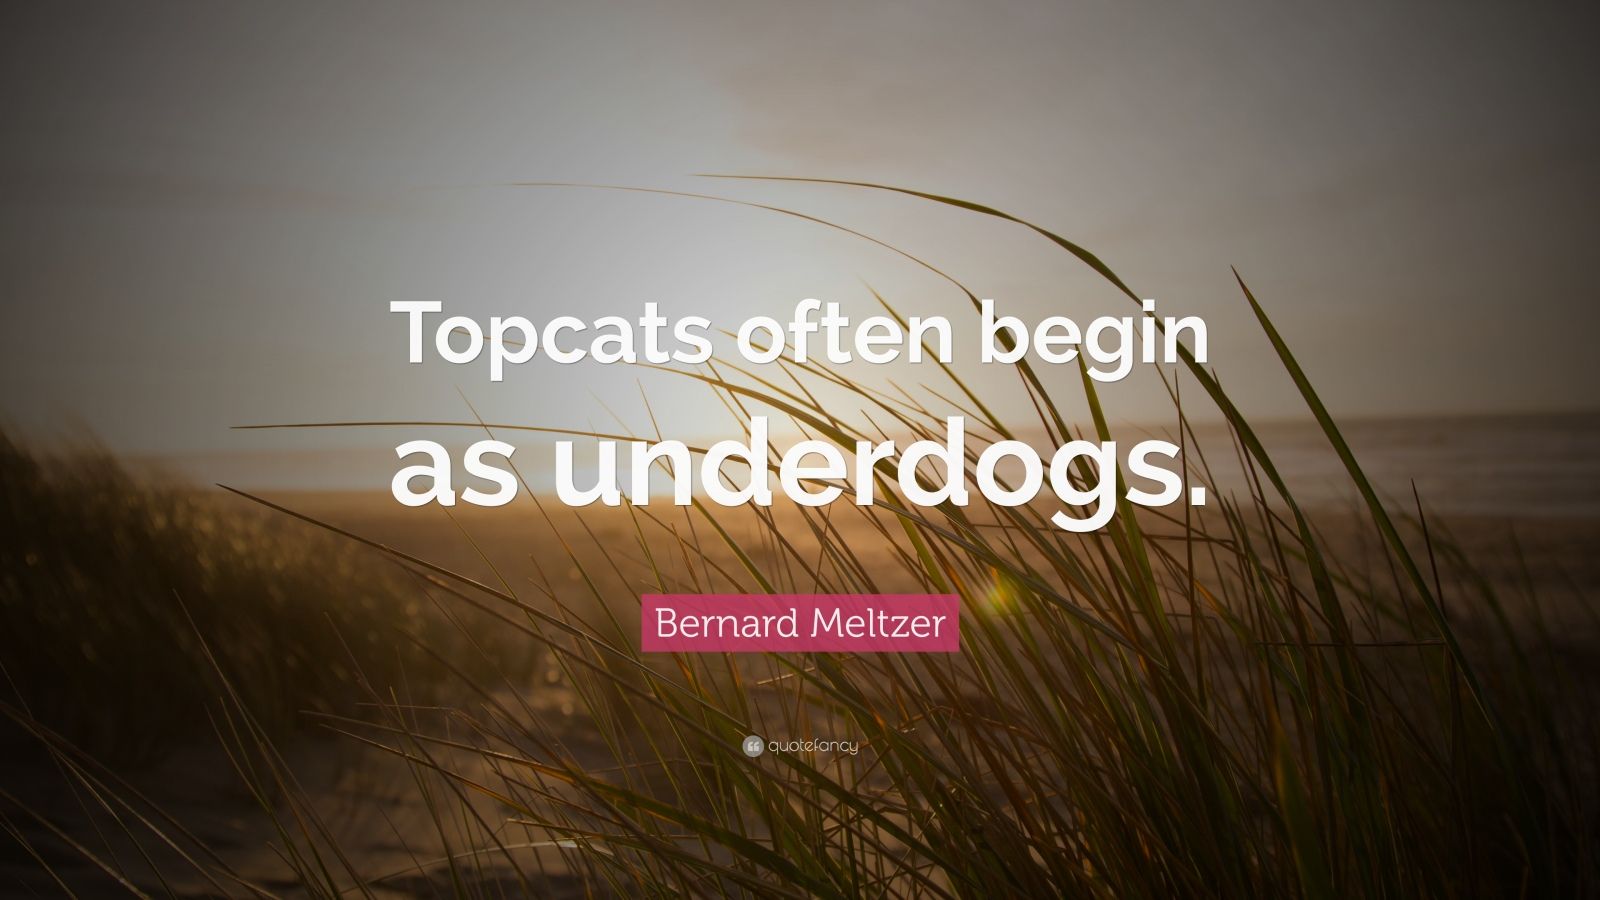 Top 10 Bernard Meltzer Quotes | 2021 Edition | Free Images - QuoteFancy